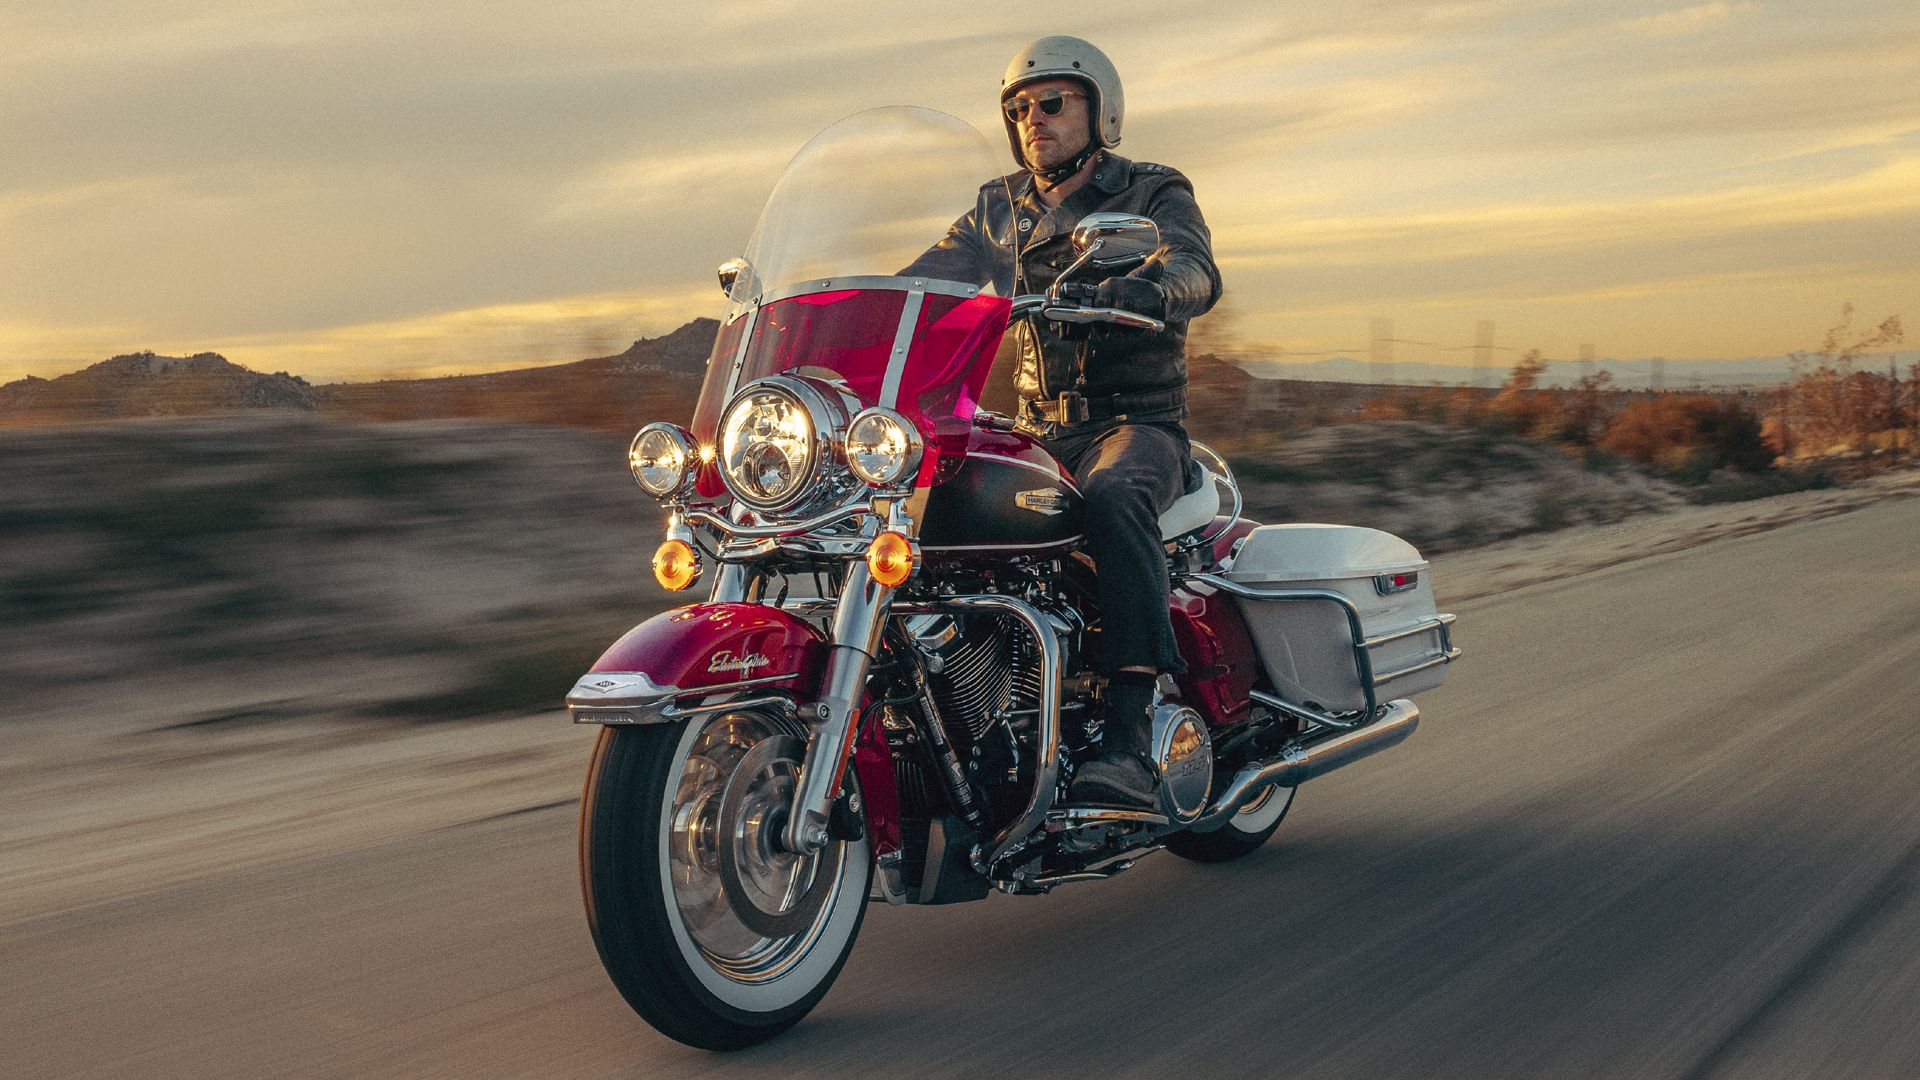 2023 Harley-Davidson Electra Glide Highway King great cruiser motorcycle